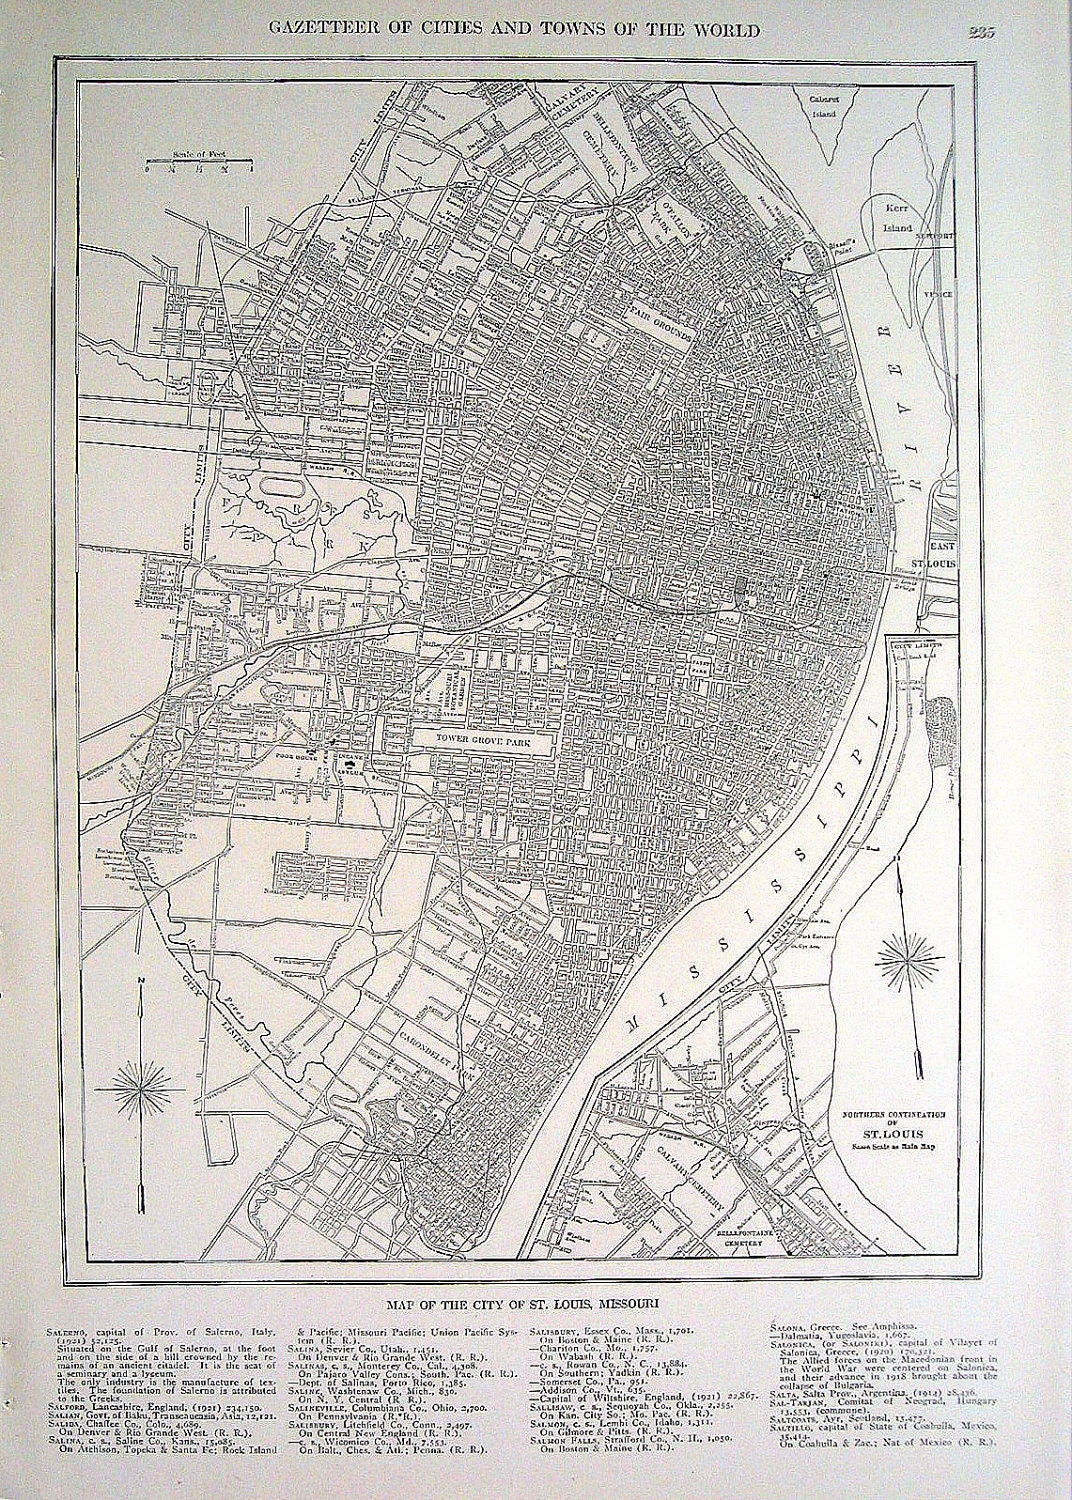 St. Louis Missouri USA City Map 1928 Vintage by mysunshinevintage